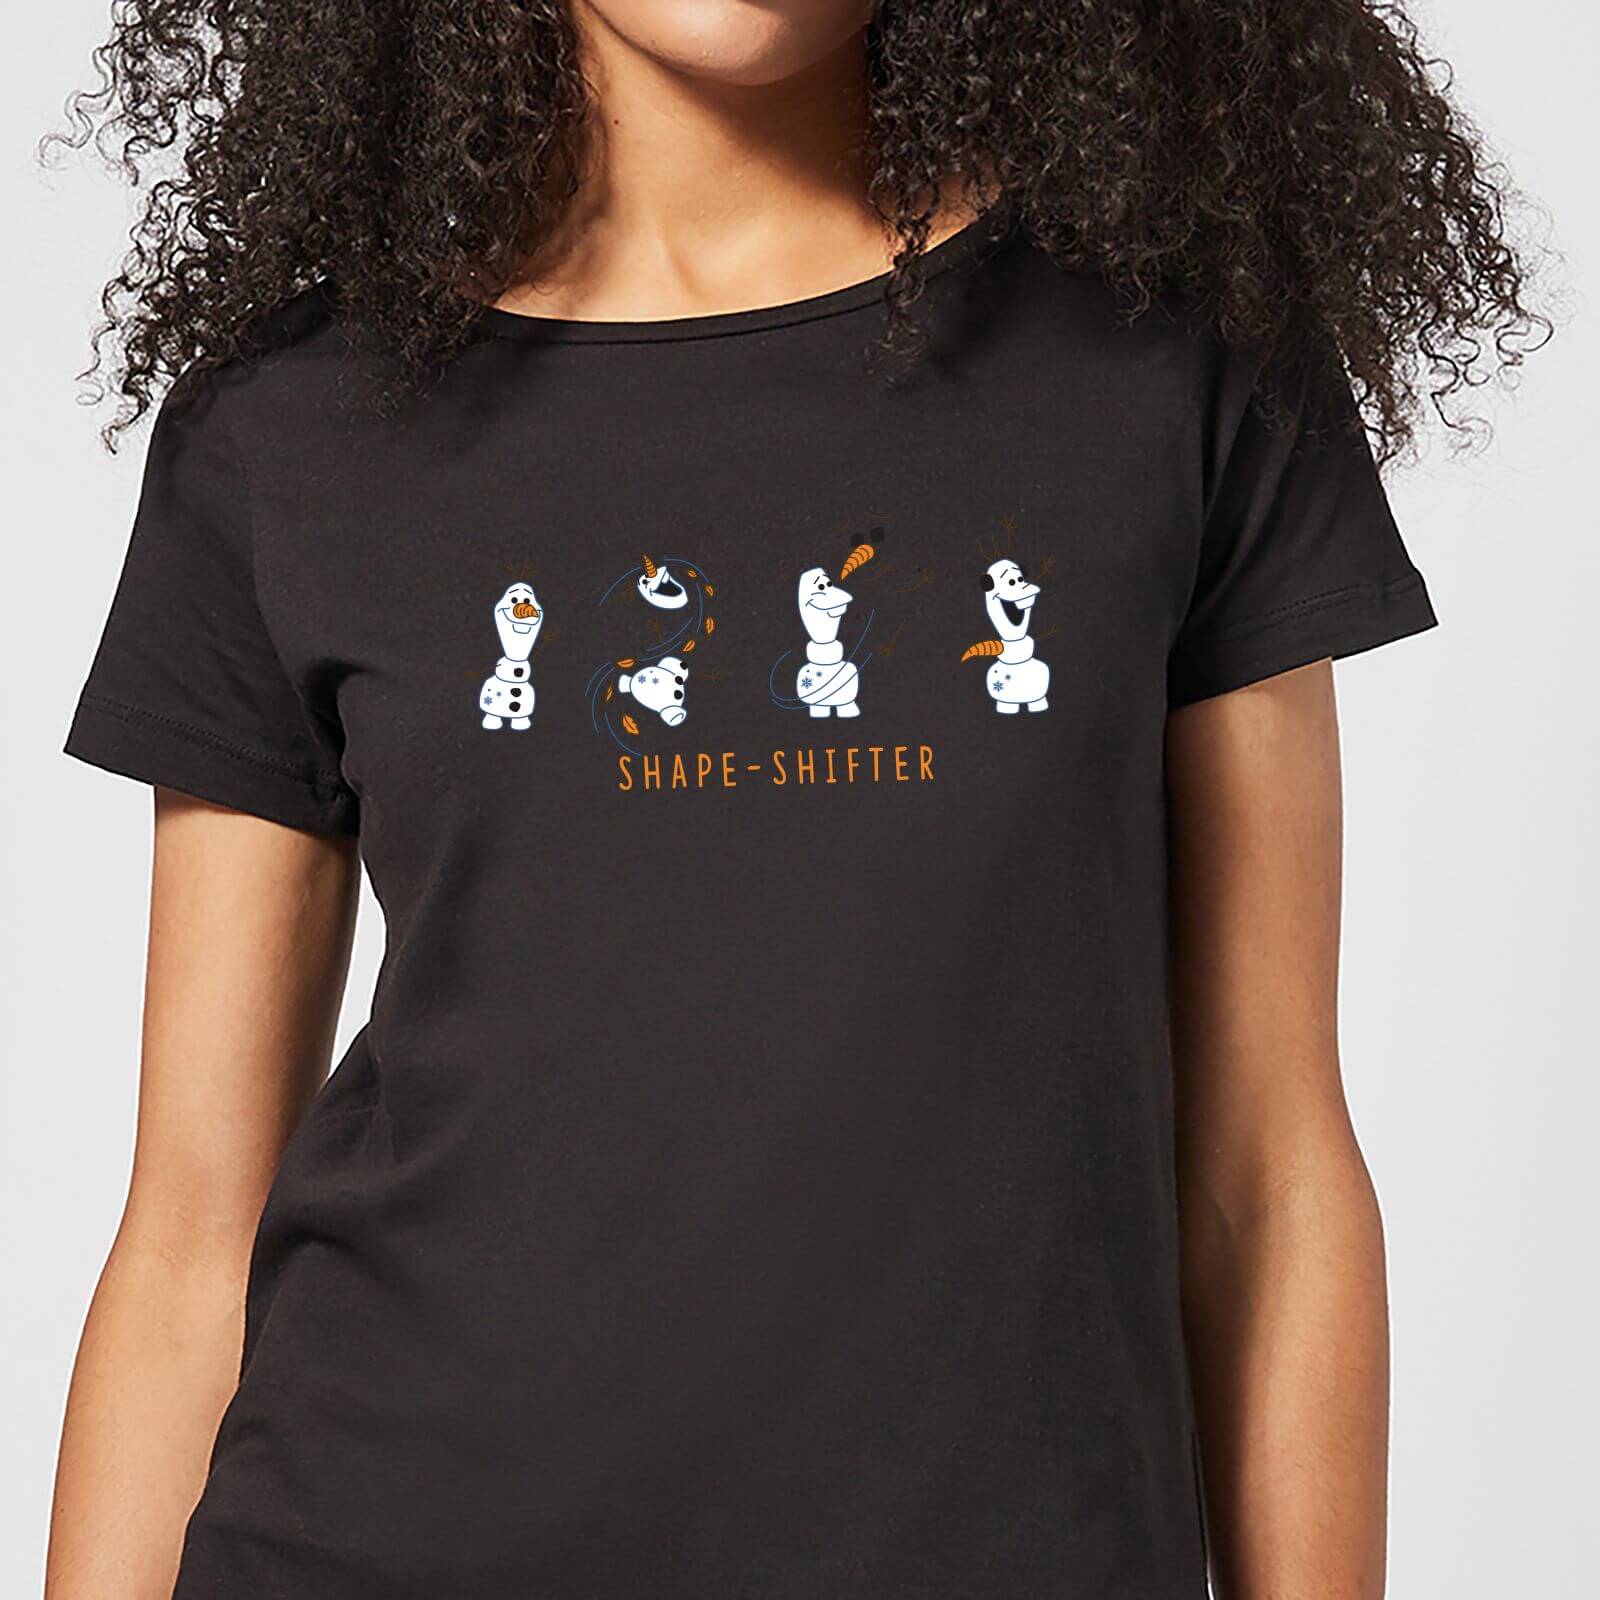 Frozen 2 Shape Shifter Women's T-Shirt - Black - M - Black